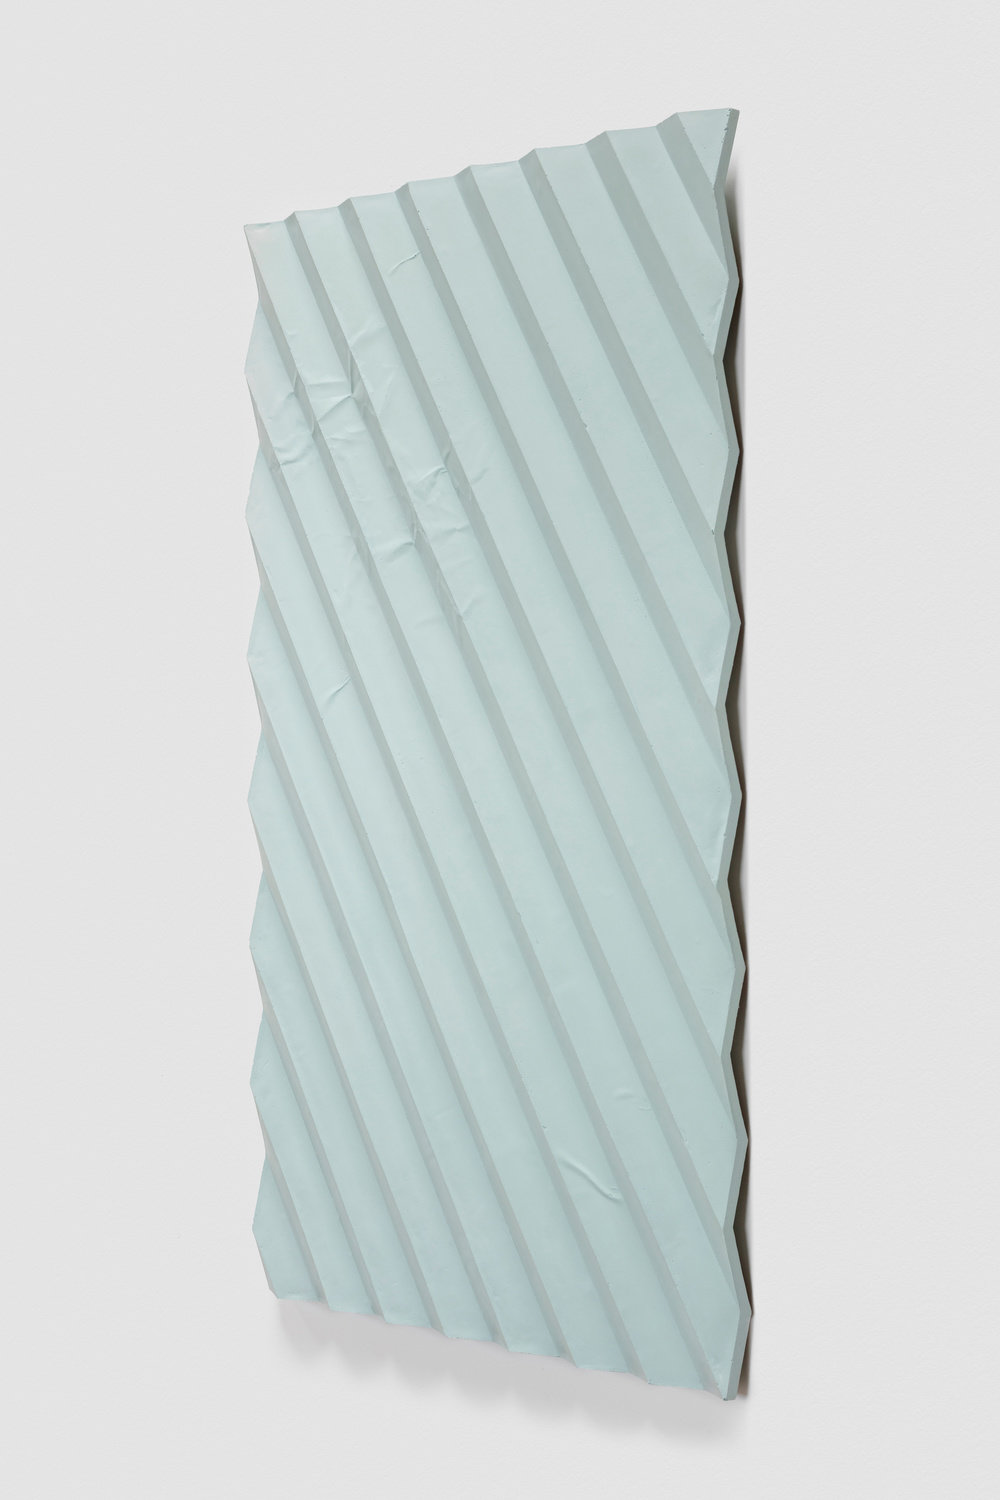 Hagen, psychosynthesis ii (accordion fold, teal, carbon black, neutral gray) (view 2), 2017 2019, mixed media, 72 x 43 x 3 in., 182.9 x 109.2 x 7.6 cm, cnon 60.896 joshua wilson white